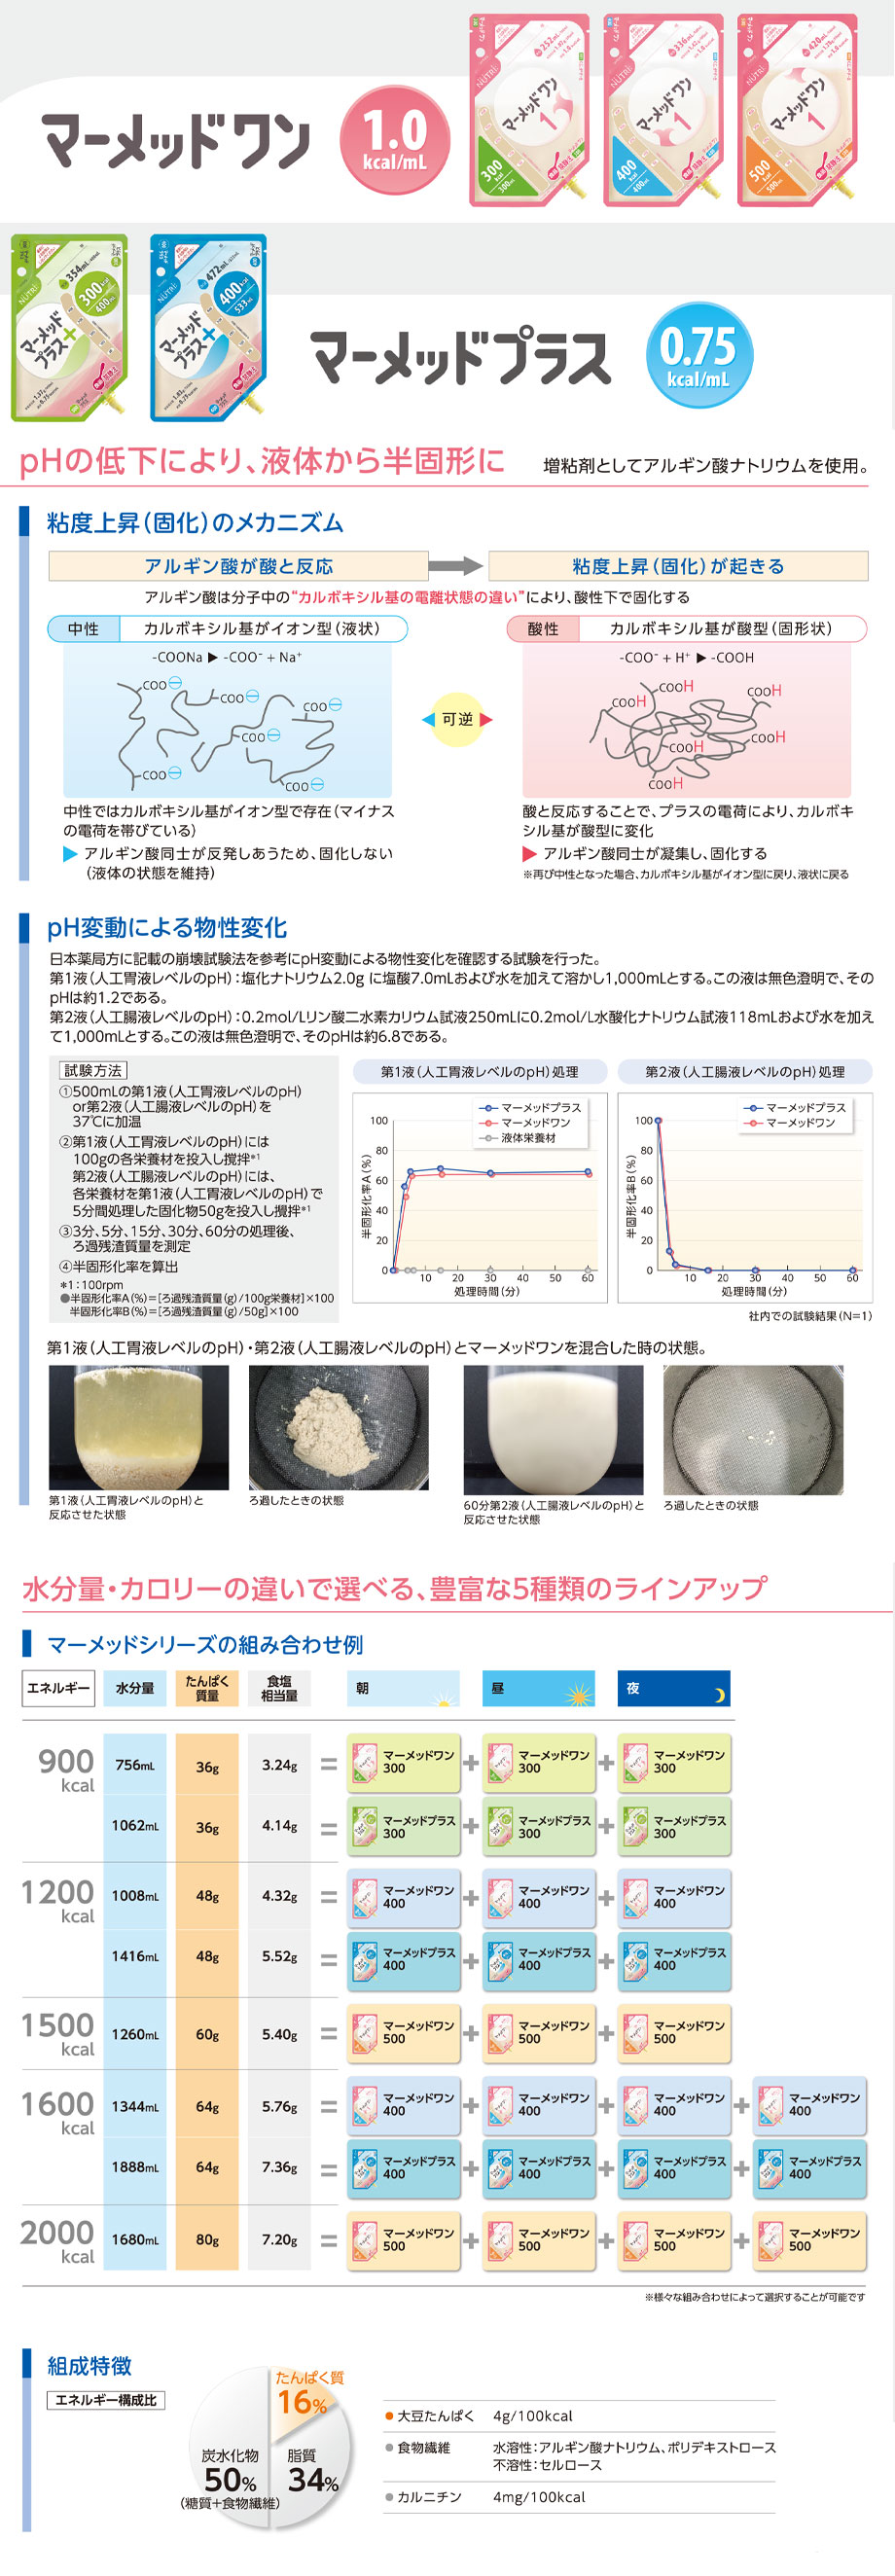 pHの低下により、液体から半固形に変化する。1.0kcal/mL。粘度可変型栄養材。使いやすい流動性。アルギン酸ナトリウム大豆たんぱく、カルニチン含有半消化態として設計。日本人の食事摂取基準対応。